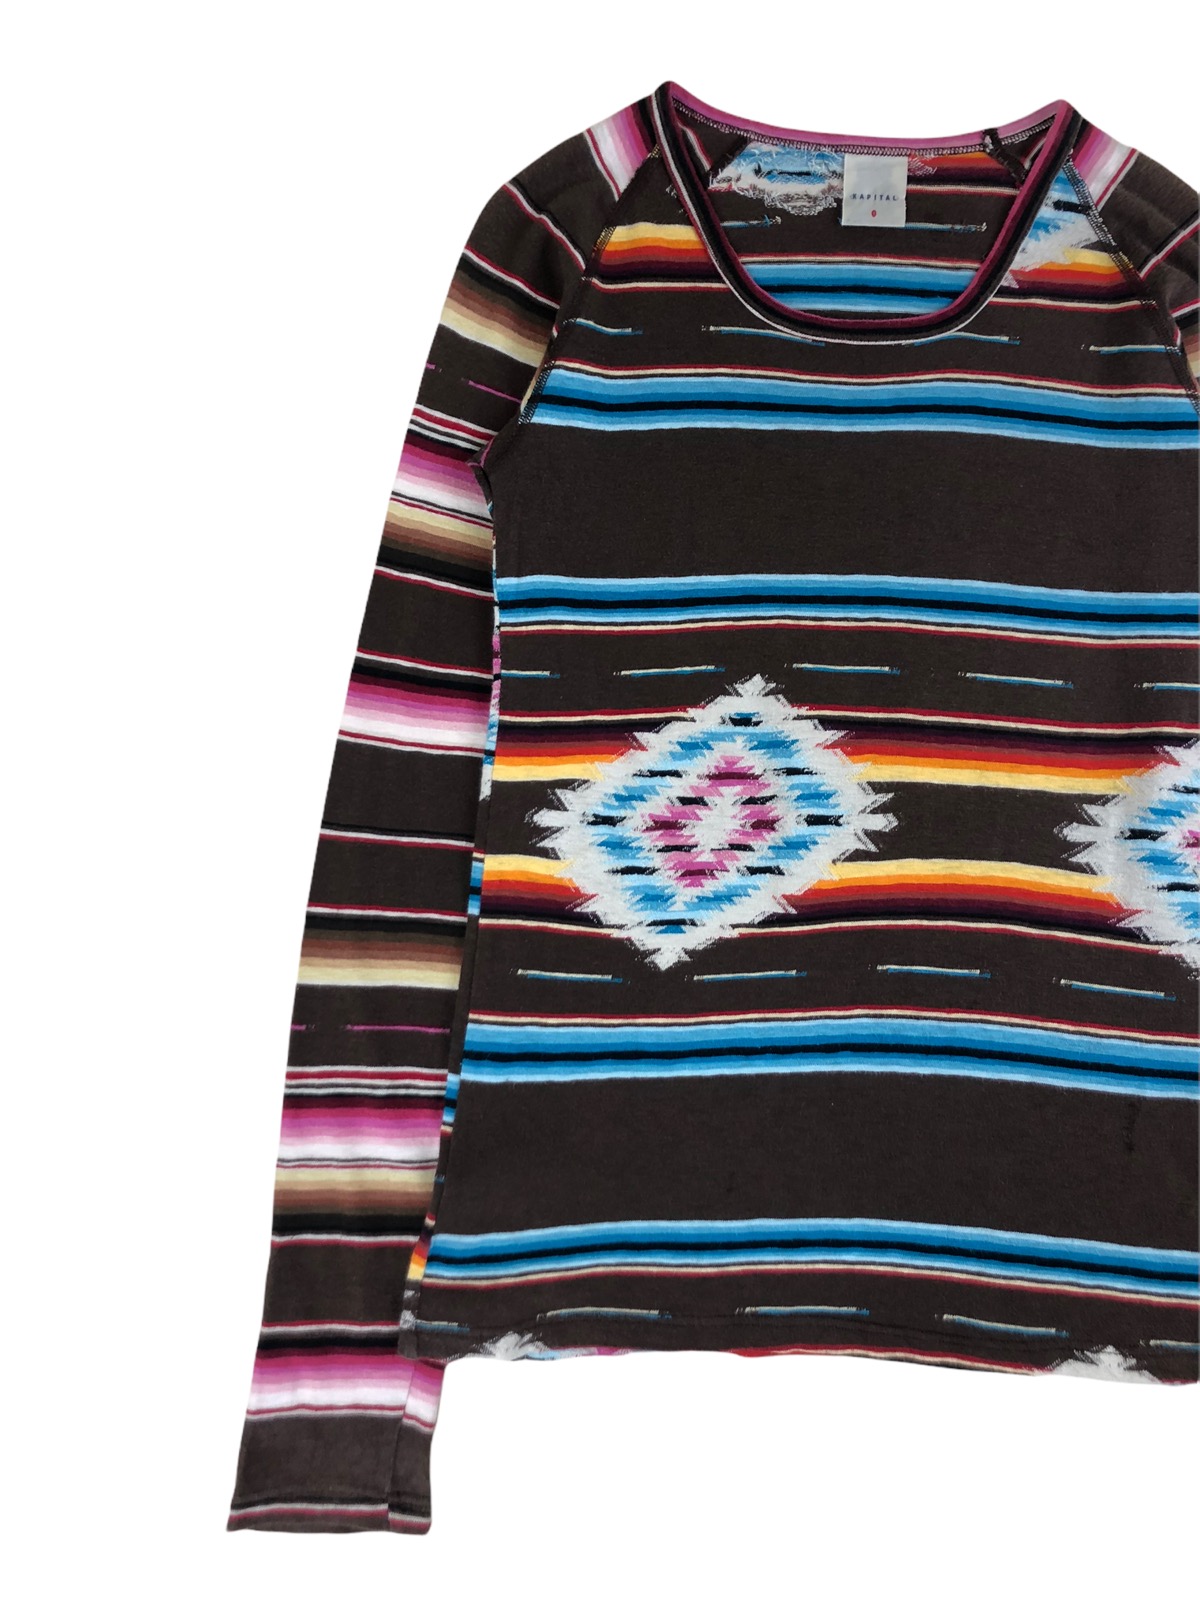 Vintage Kapital Aztec motif Cotton Knit Tshirt - 3